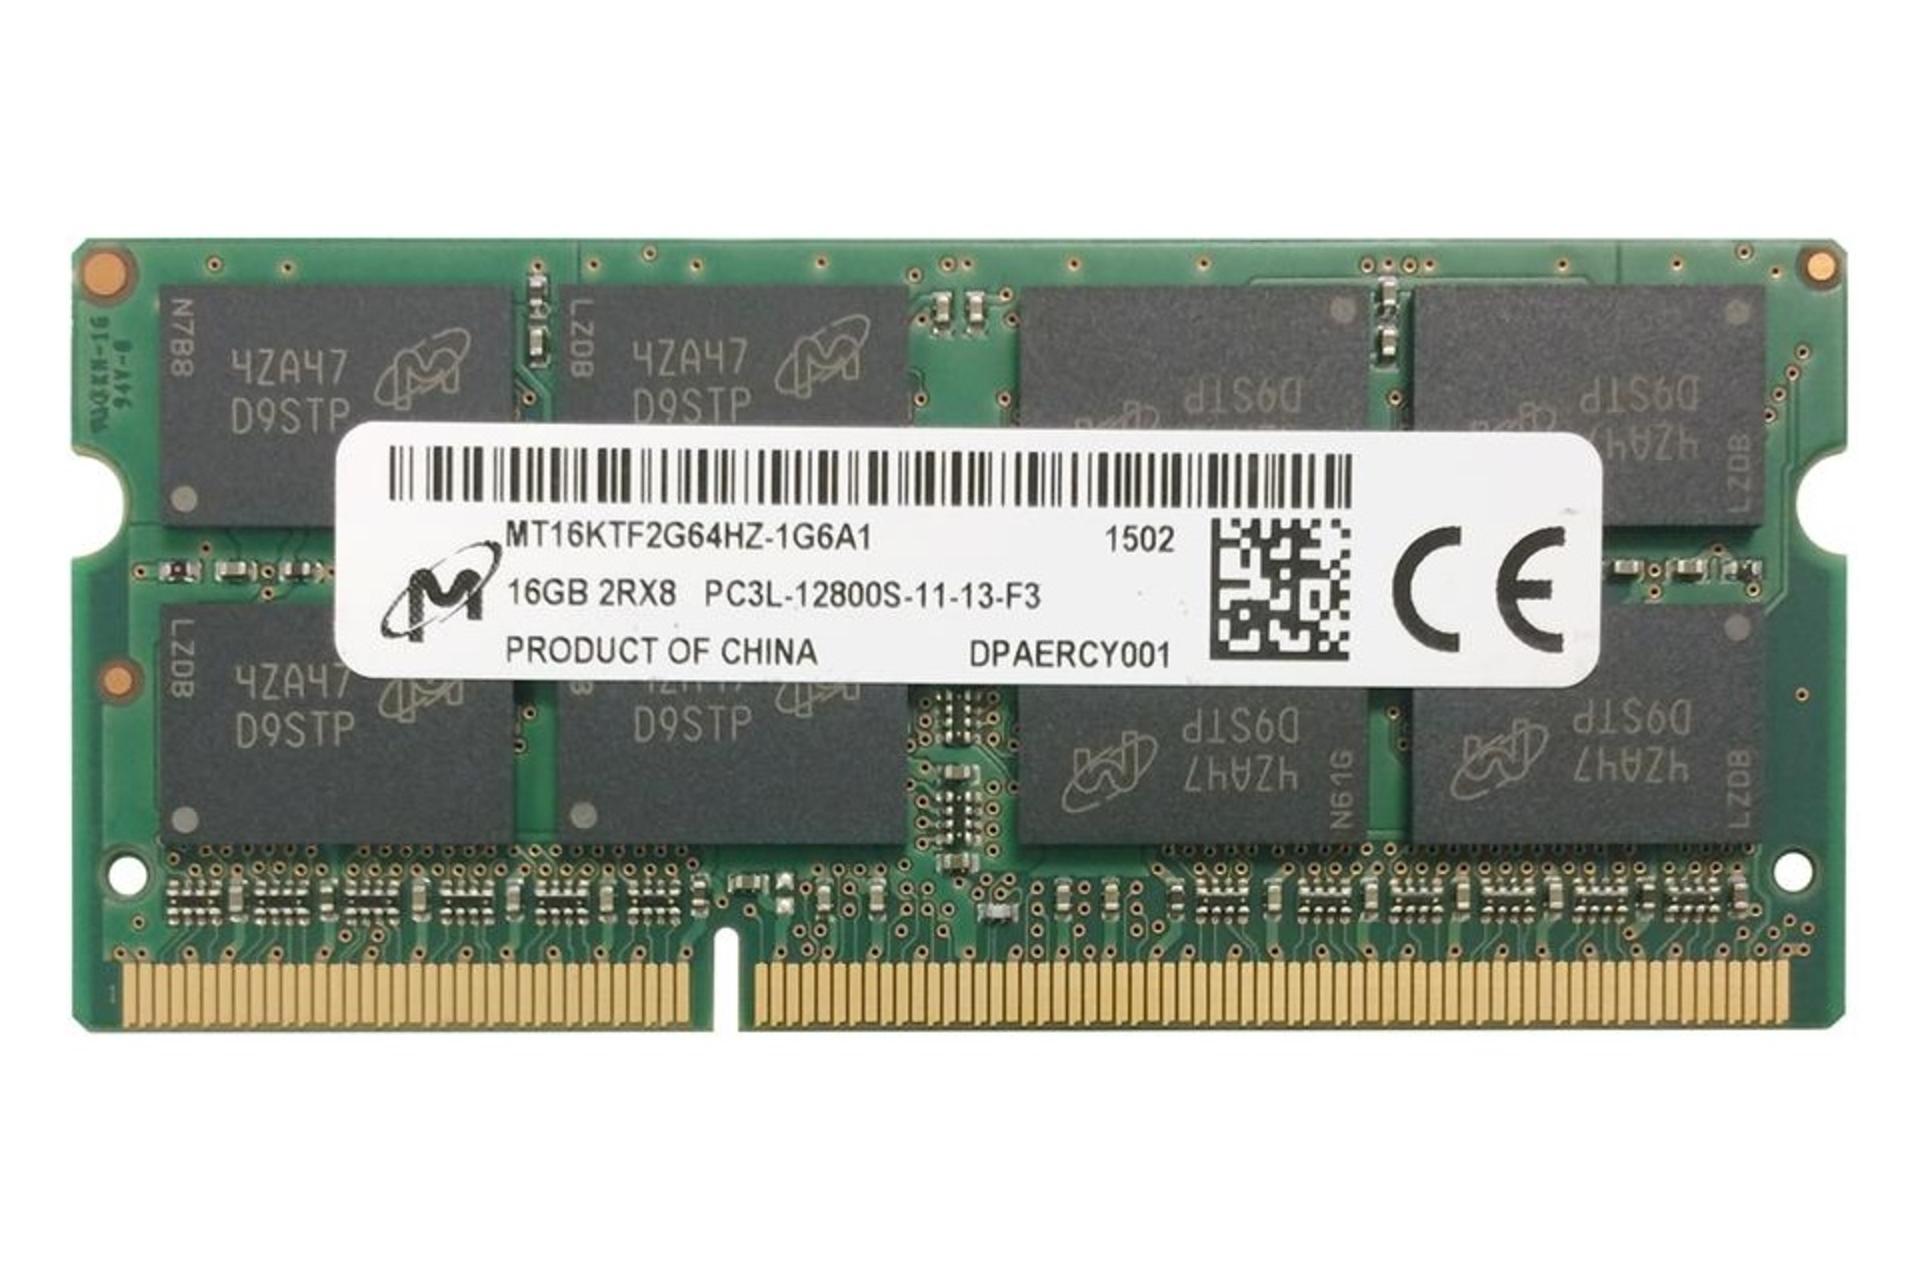 رم مایکرون Micron MT16KTF2G64HZ-1G6A1 16GB DDR3L-1600 CL11 ظرفیت 16 گیگابایت از نوع DDR3L-1600